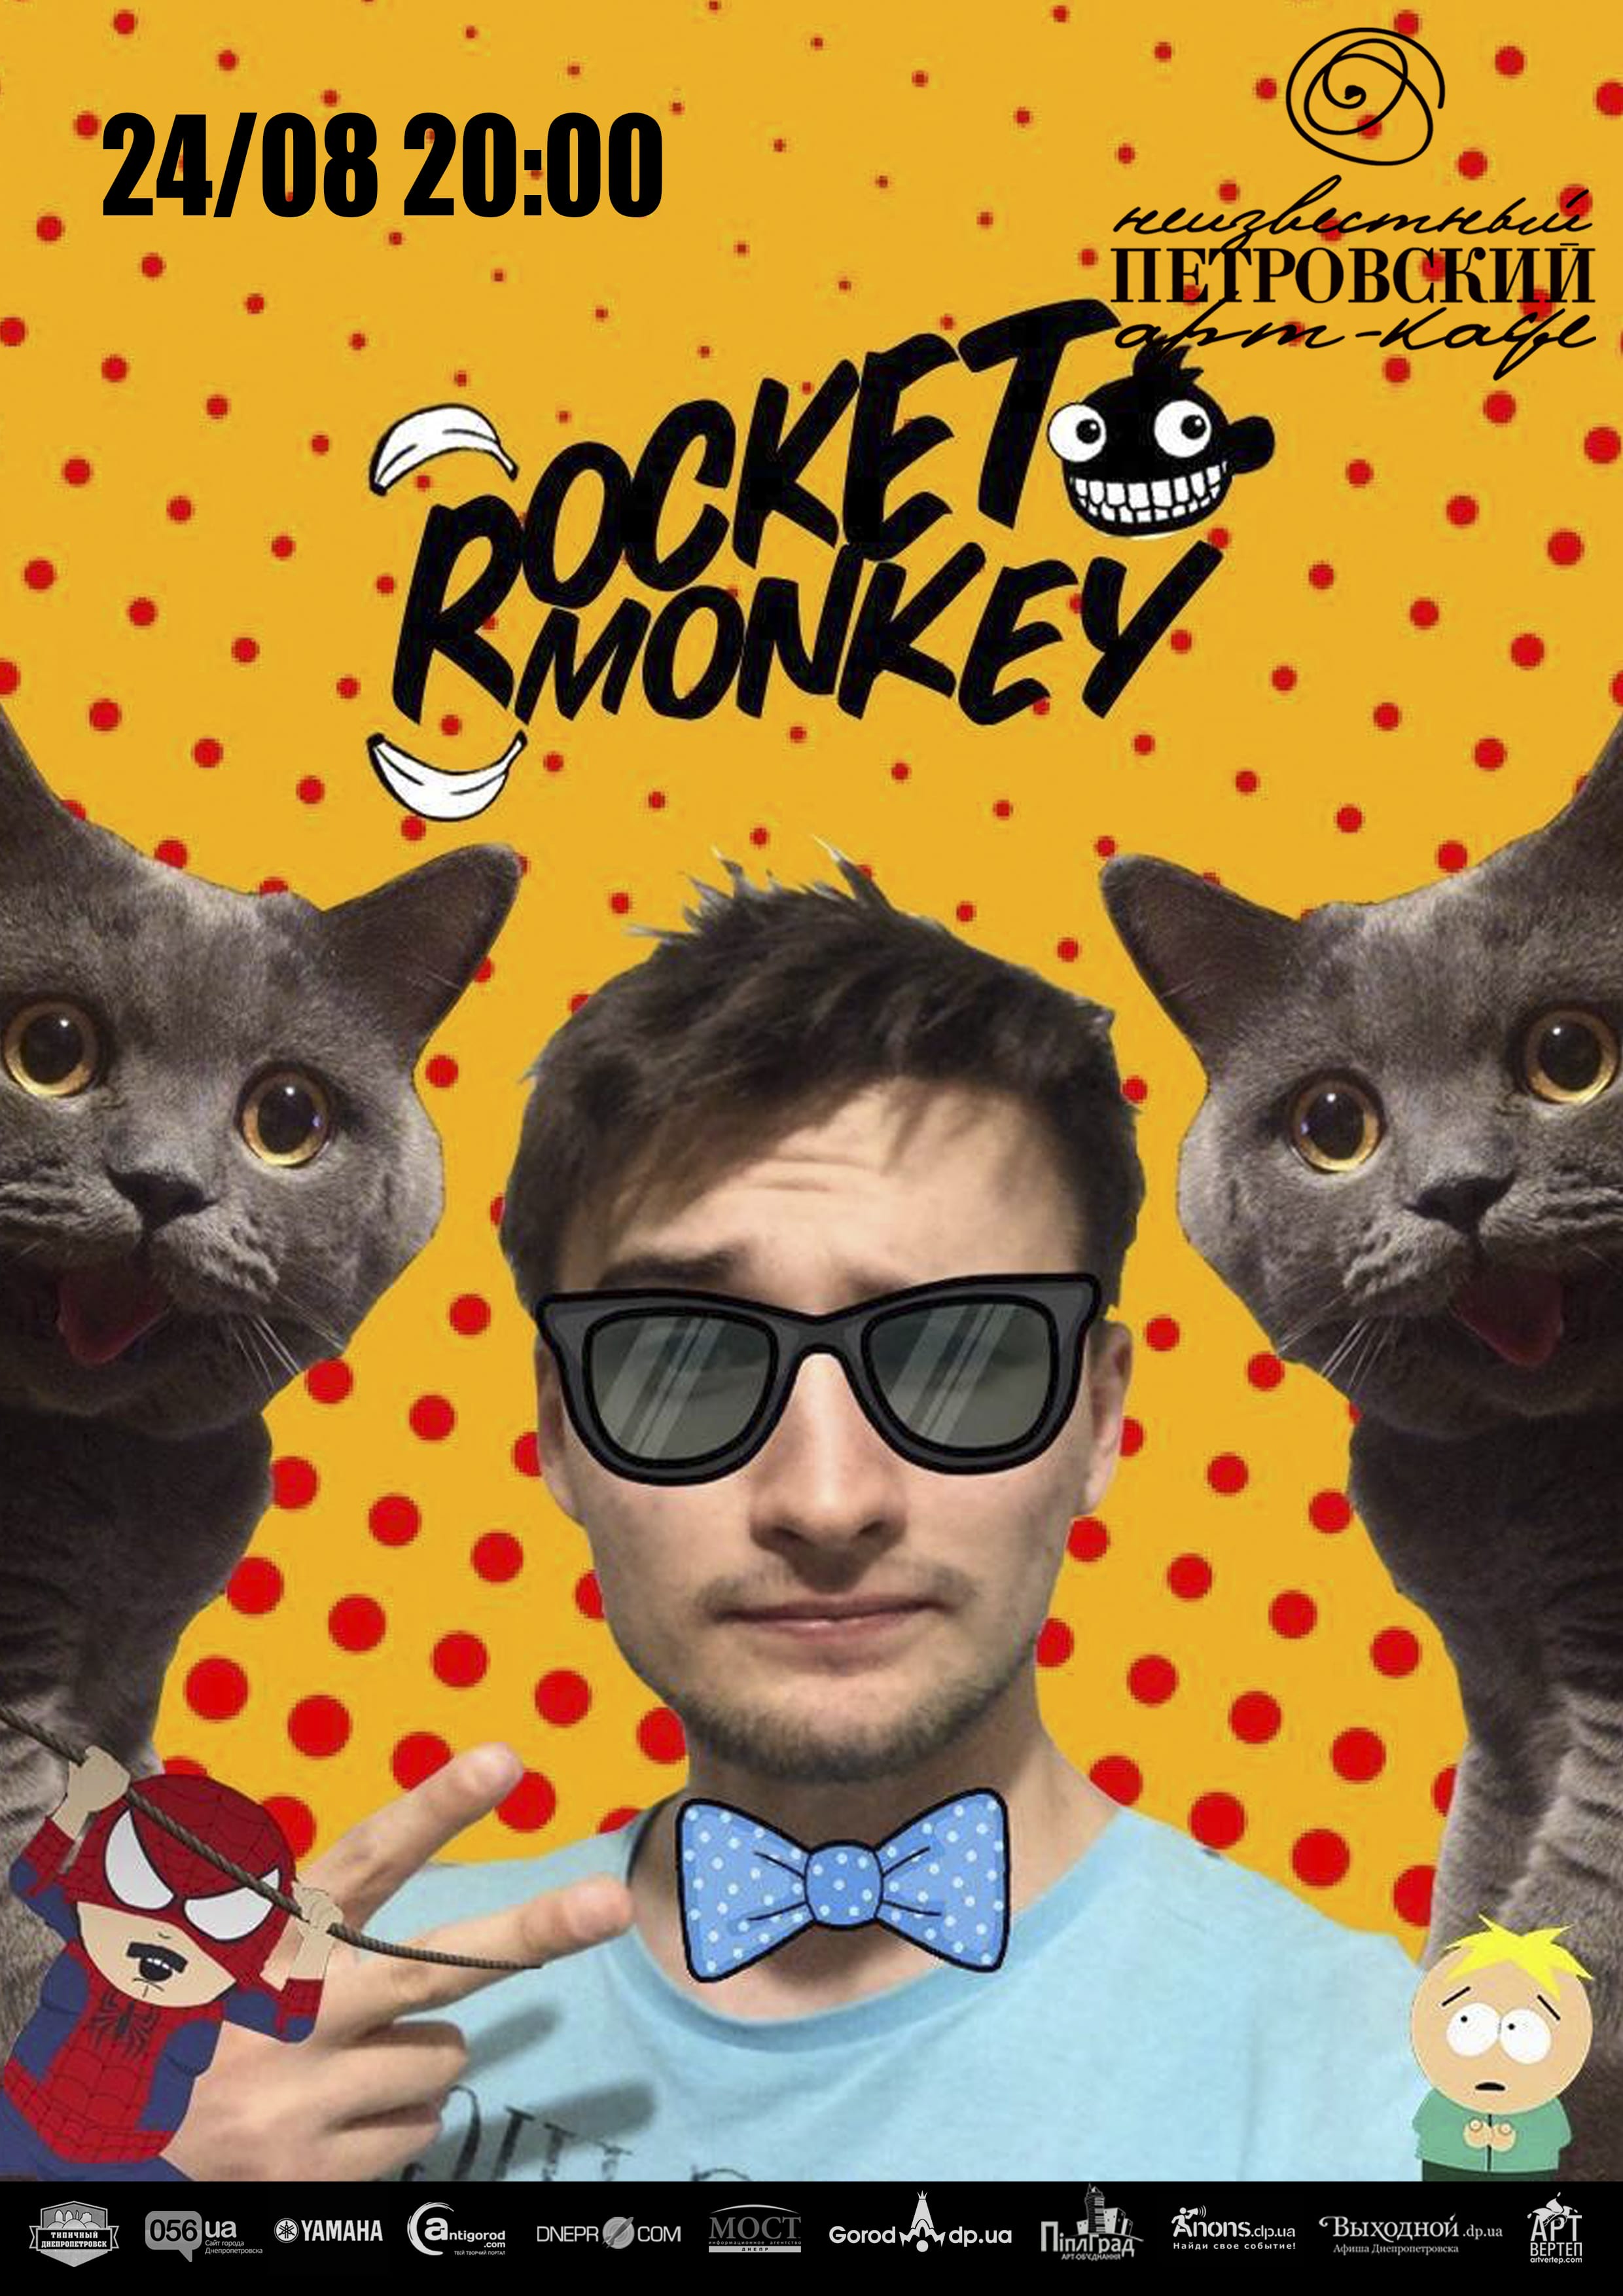 DJ Rocket Monkey plays Deep House Днепр, 24.08.2019. Афиша Днепра